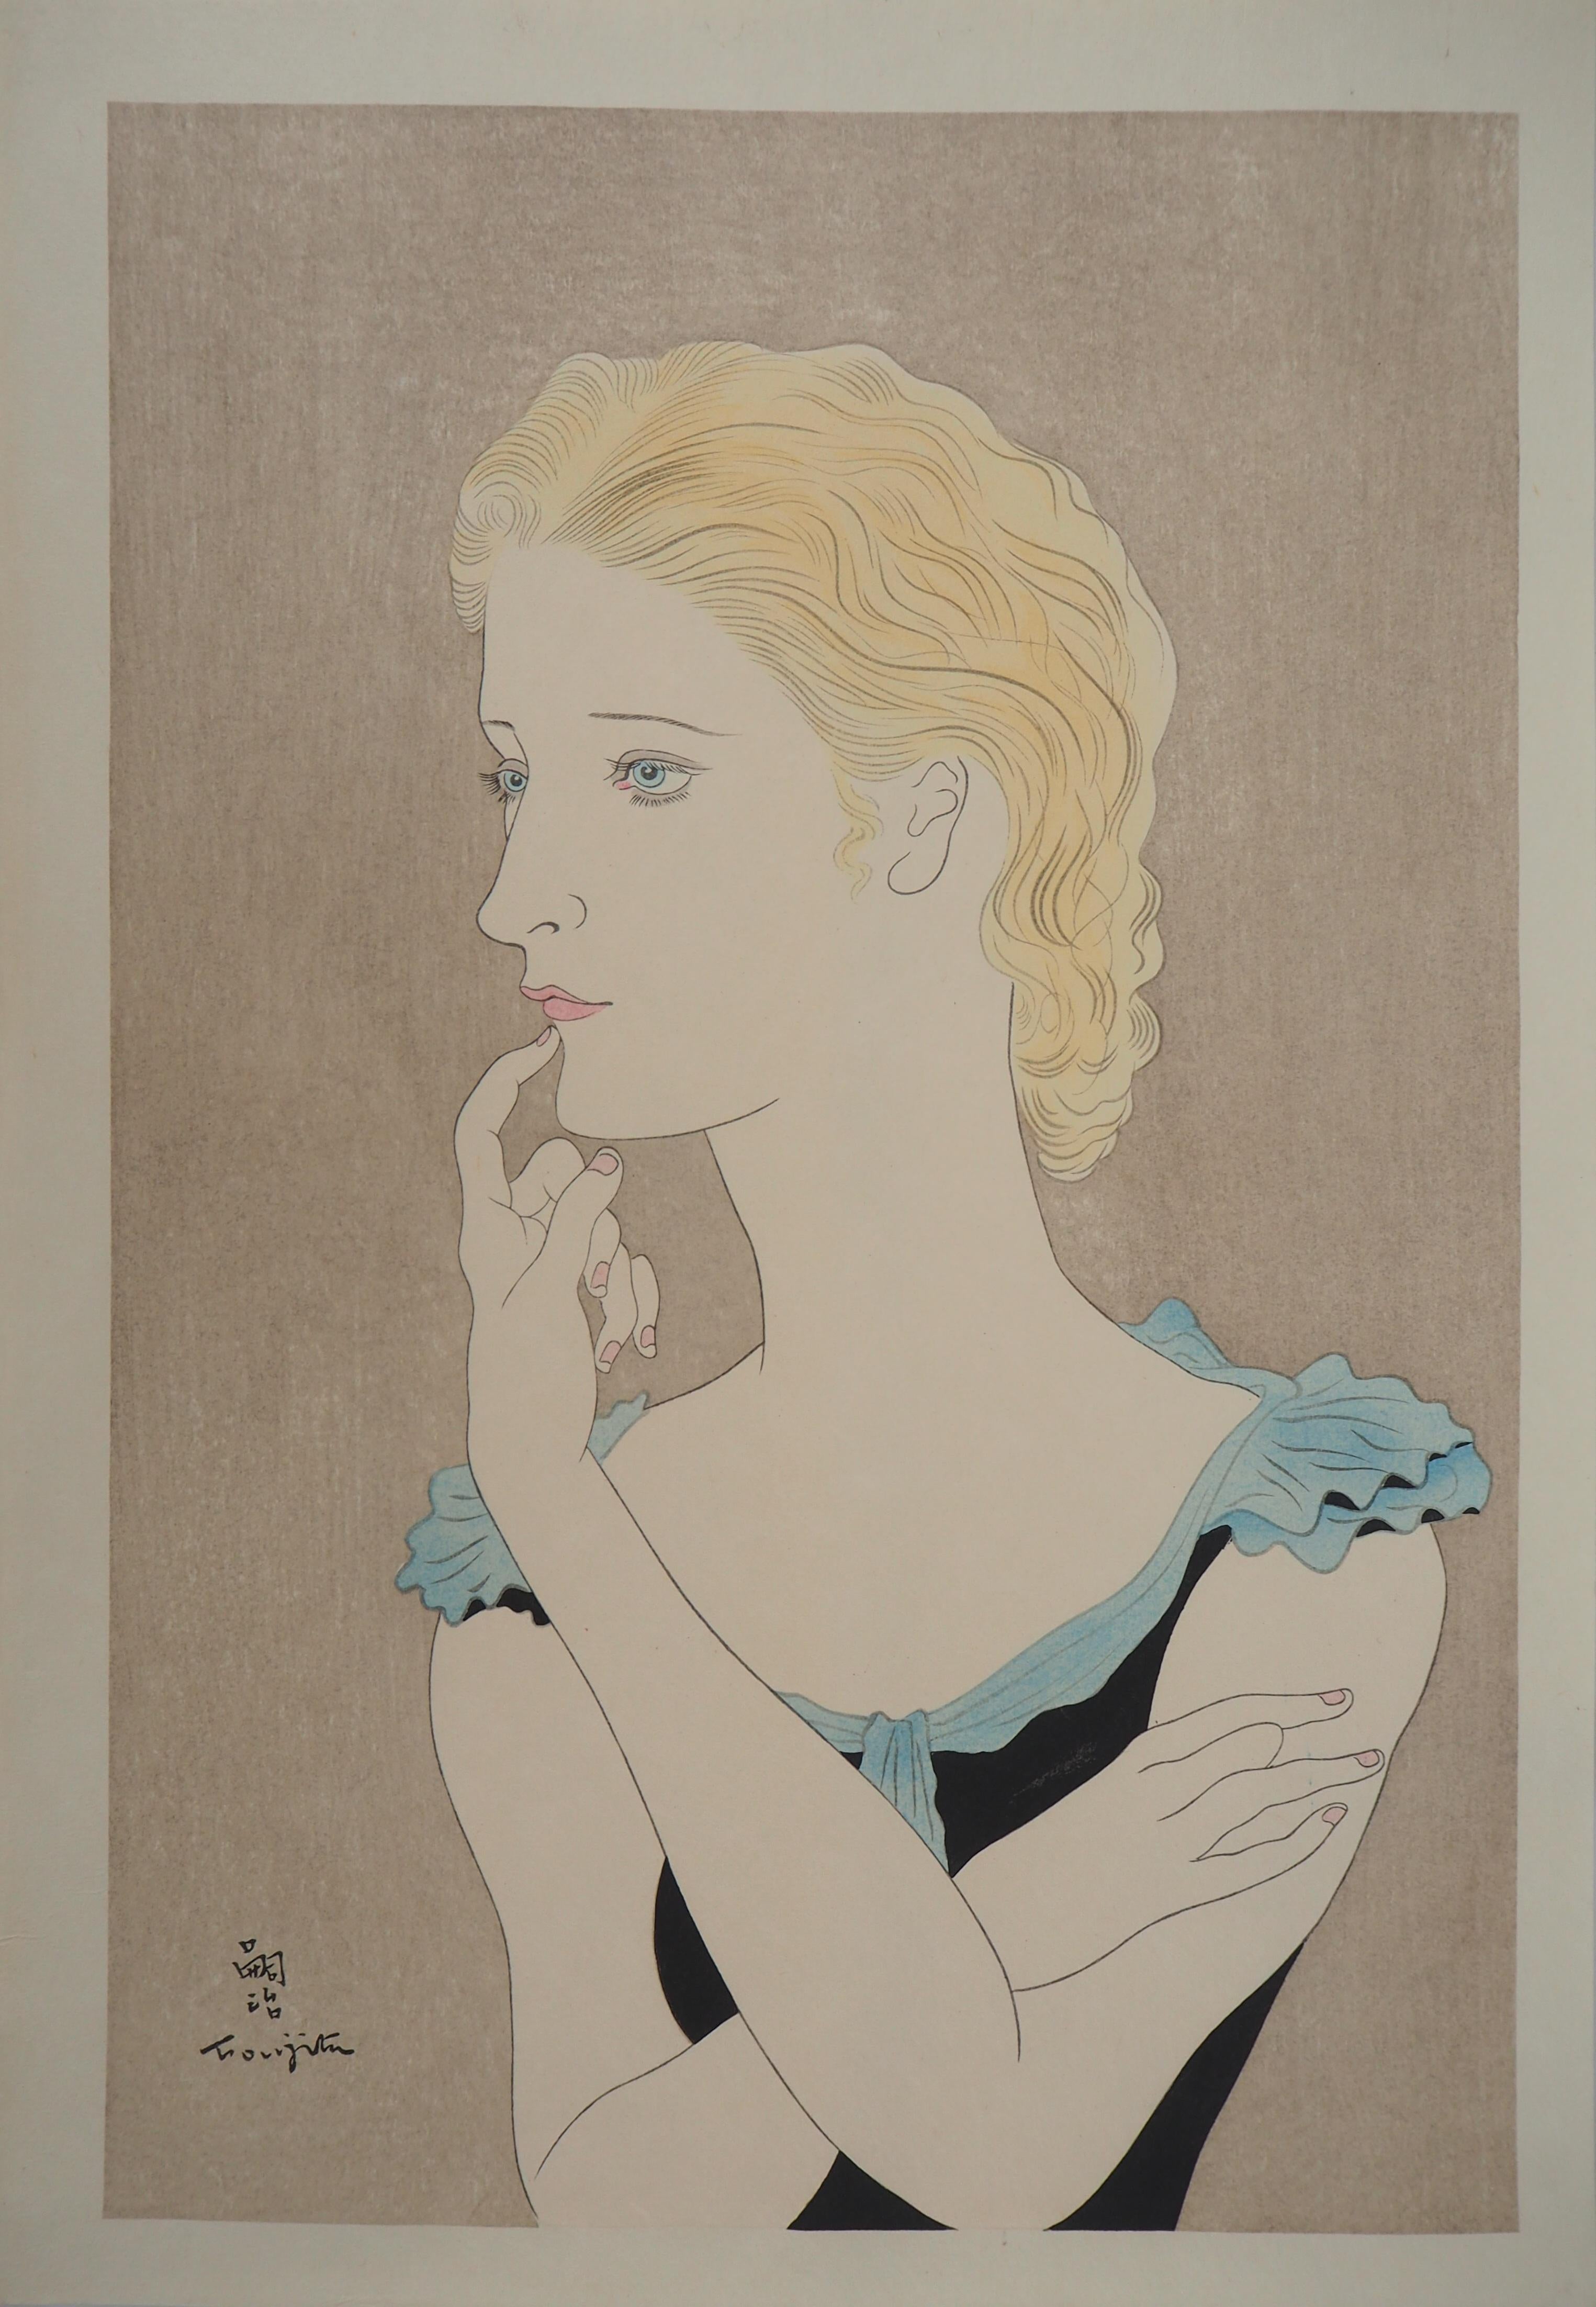 Leonard Tsuguharu Foujita Portrait Print - Blond Hair Woman - Original woodcut print (Buisson #35.08)